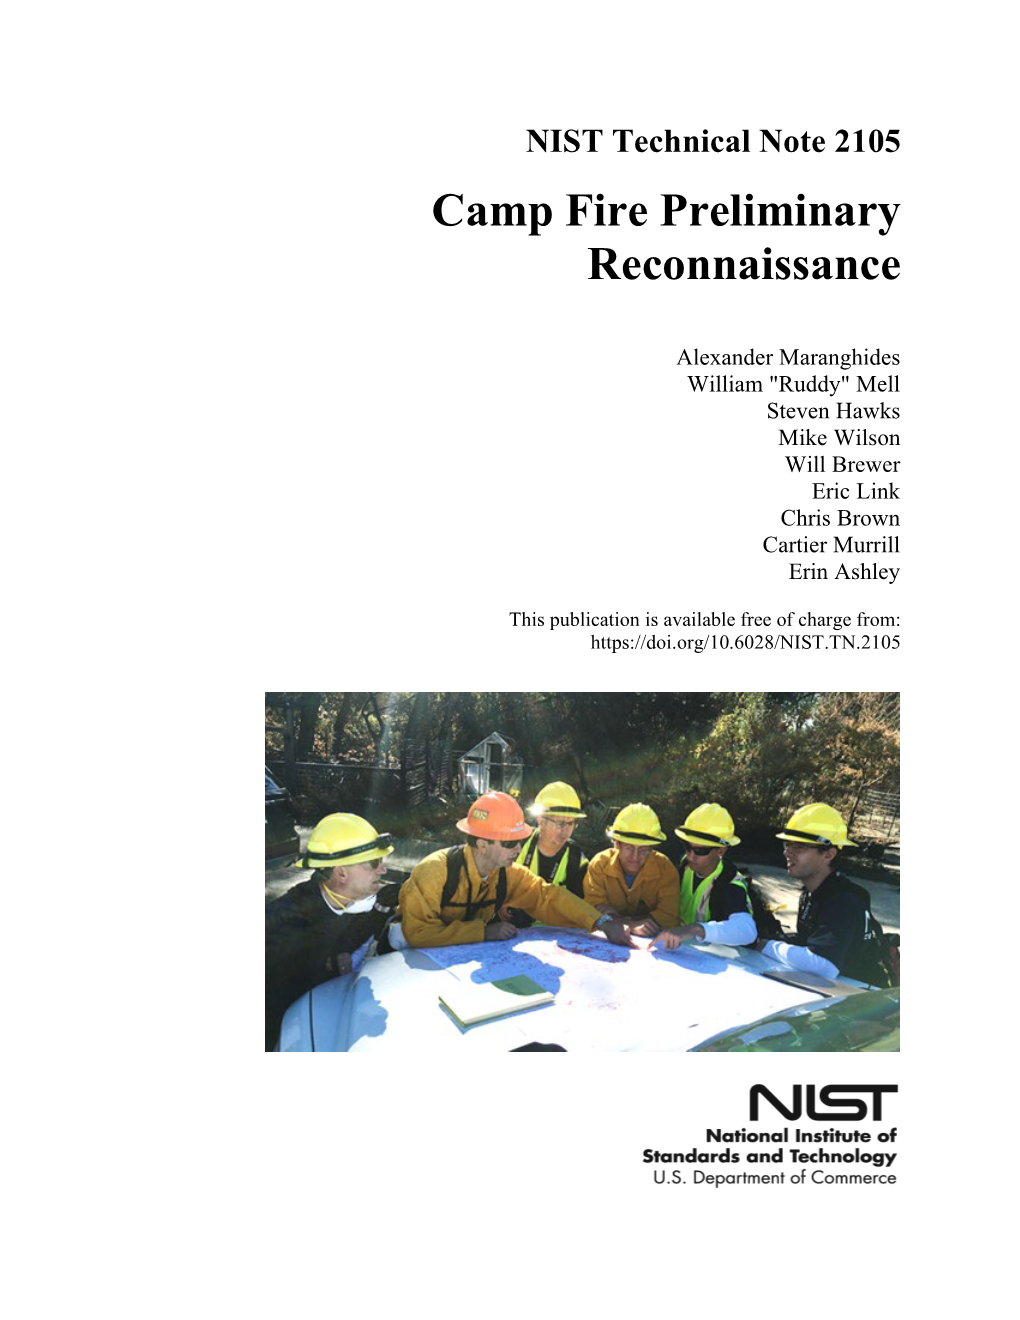 Camp Fire Preliminary Reconnaissance